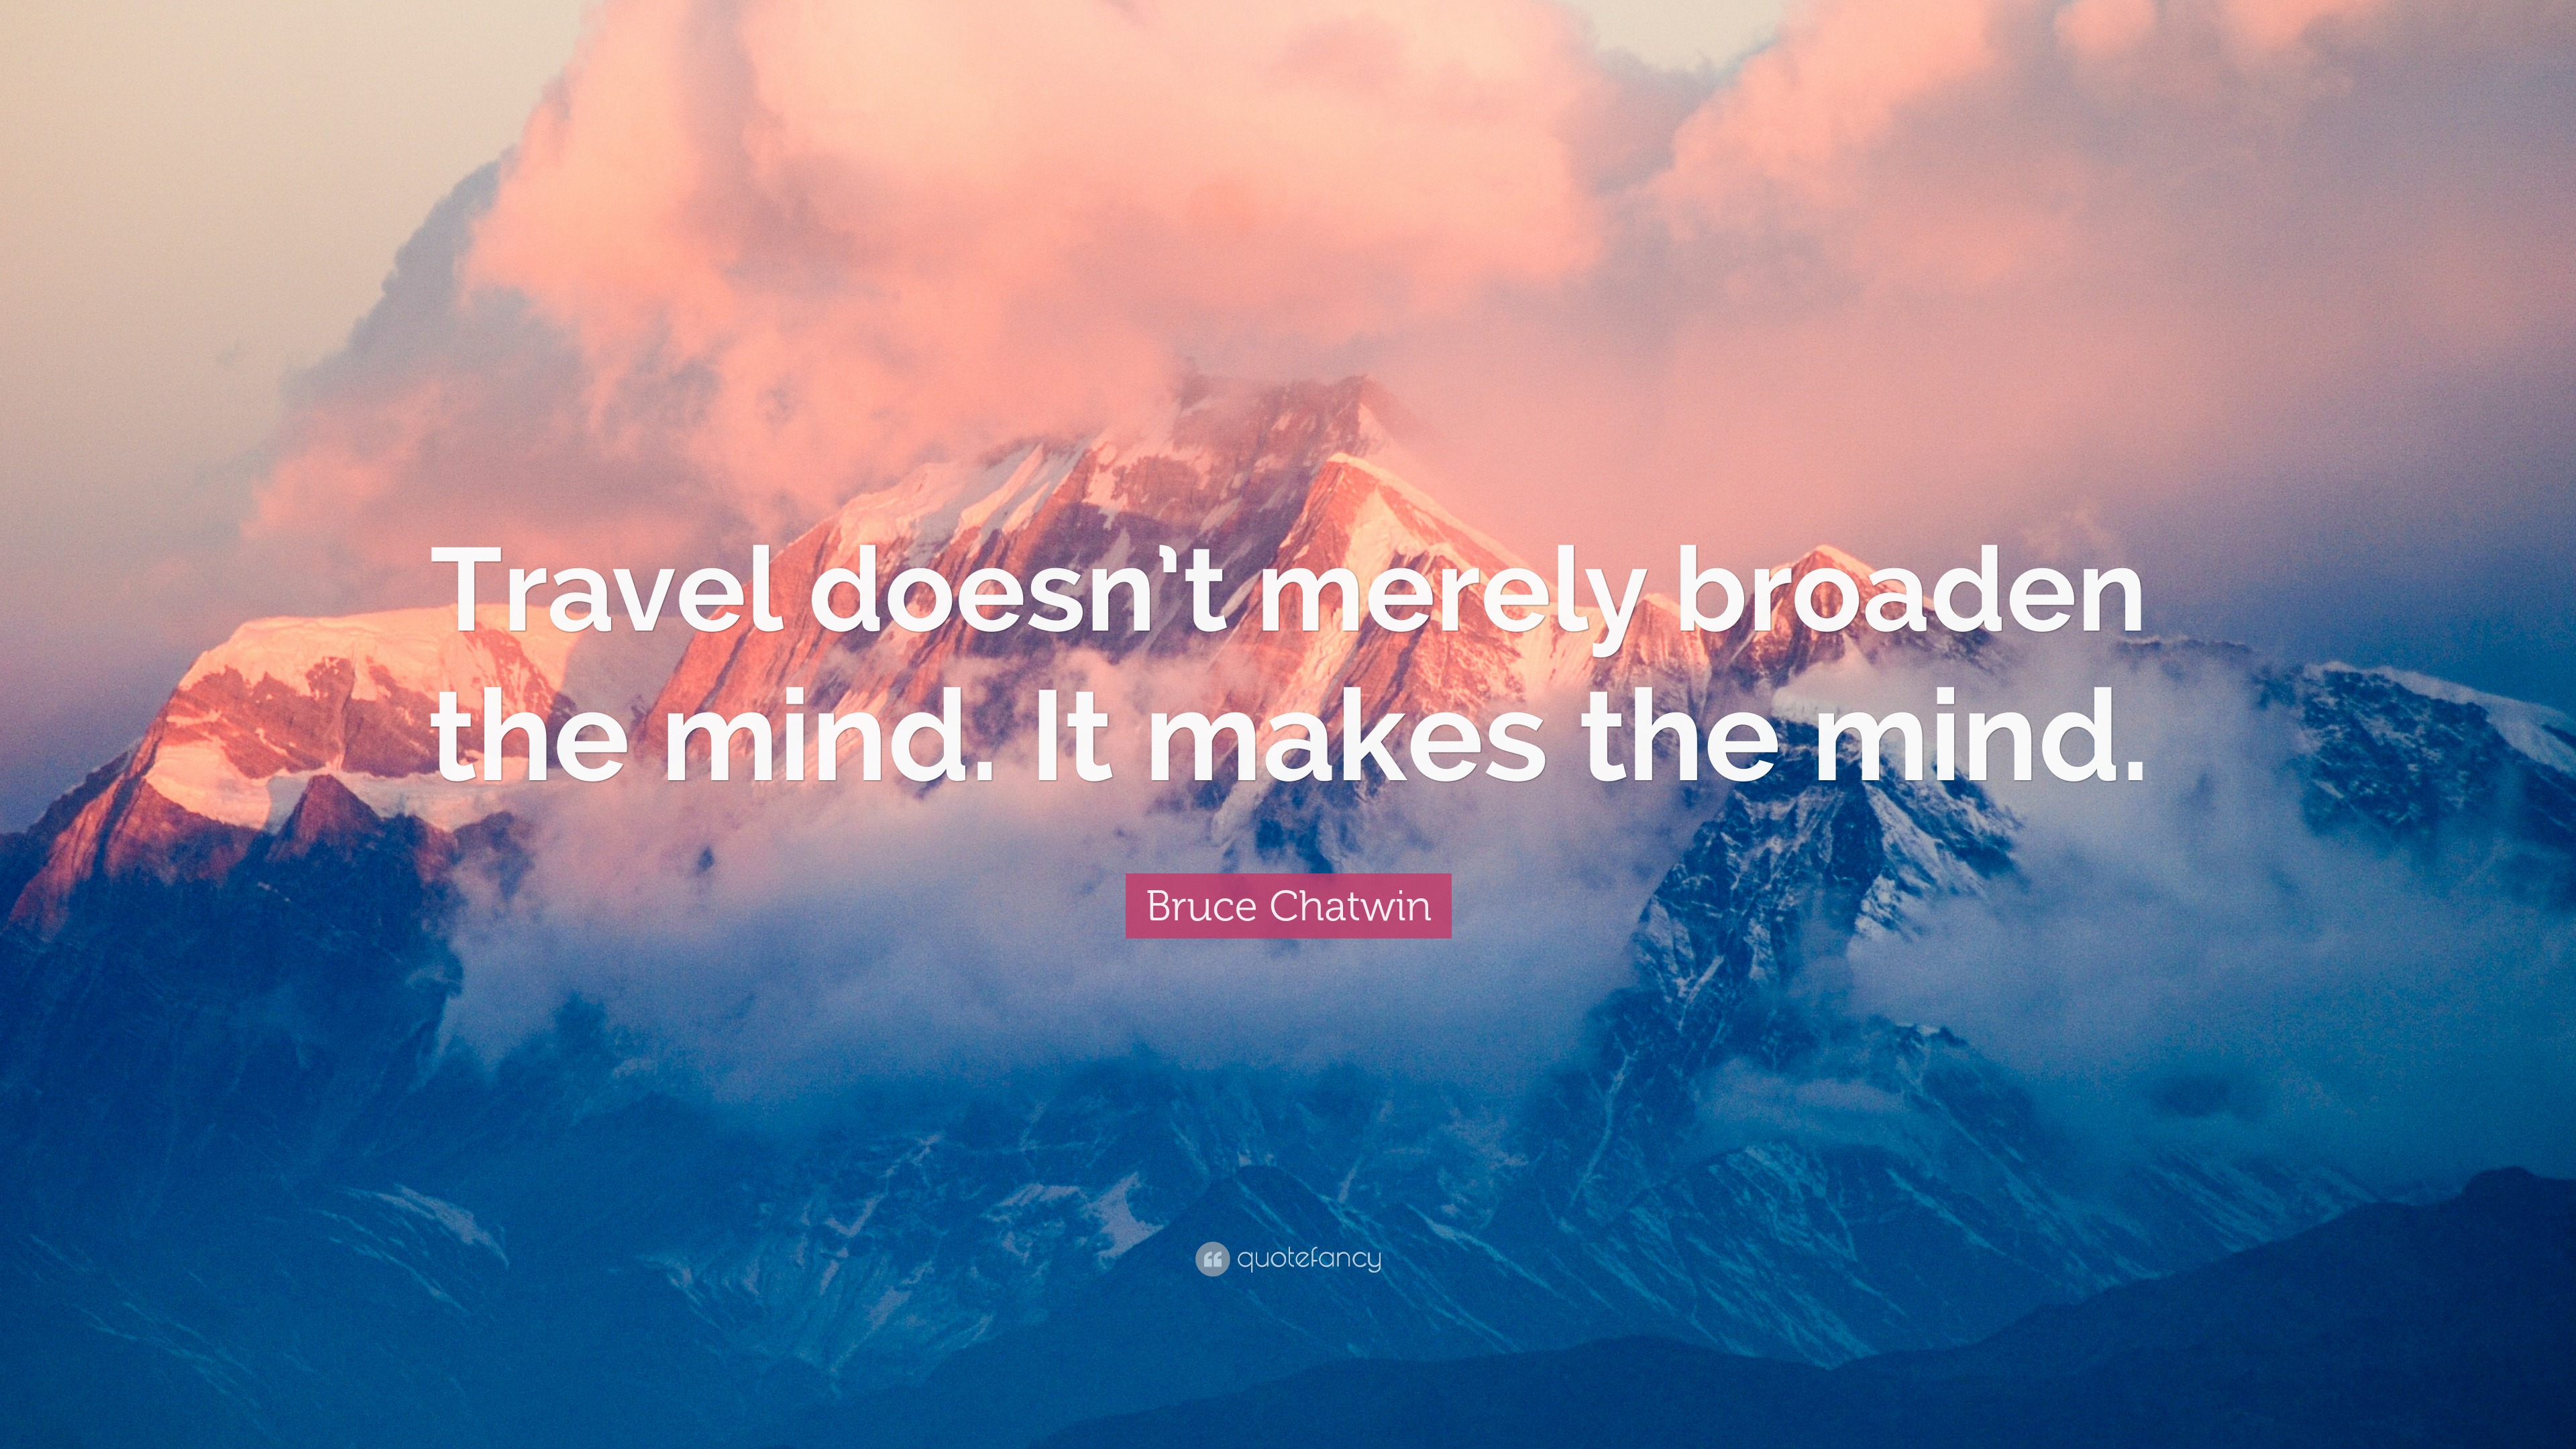 travelling broaden the mind